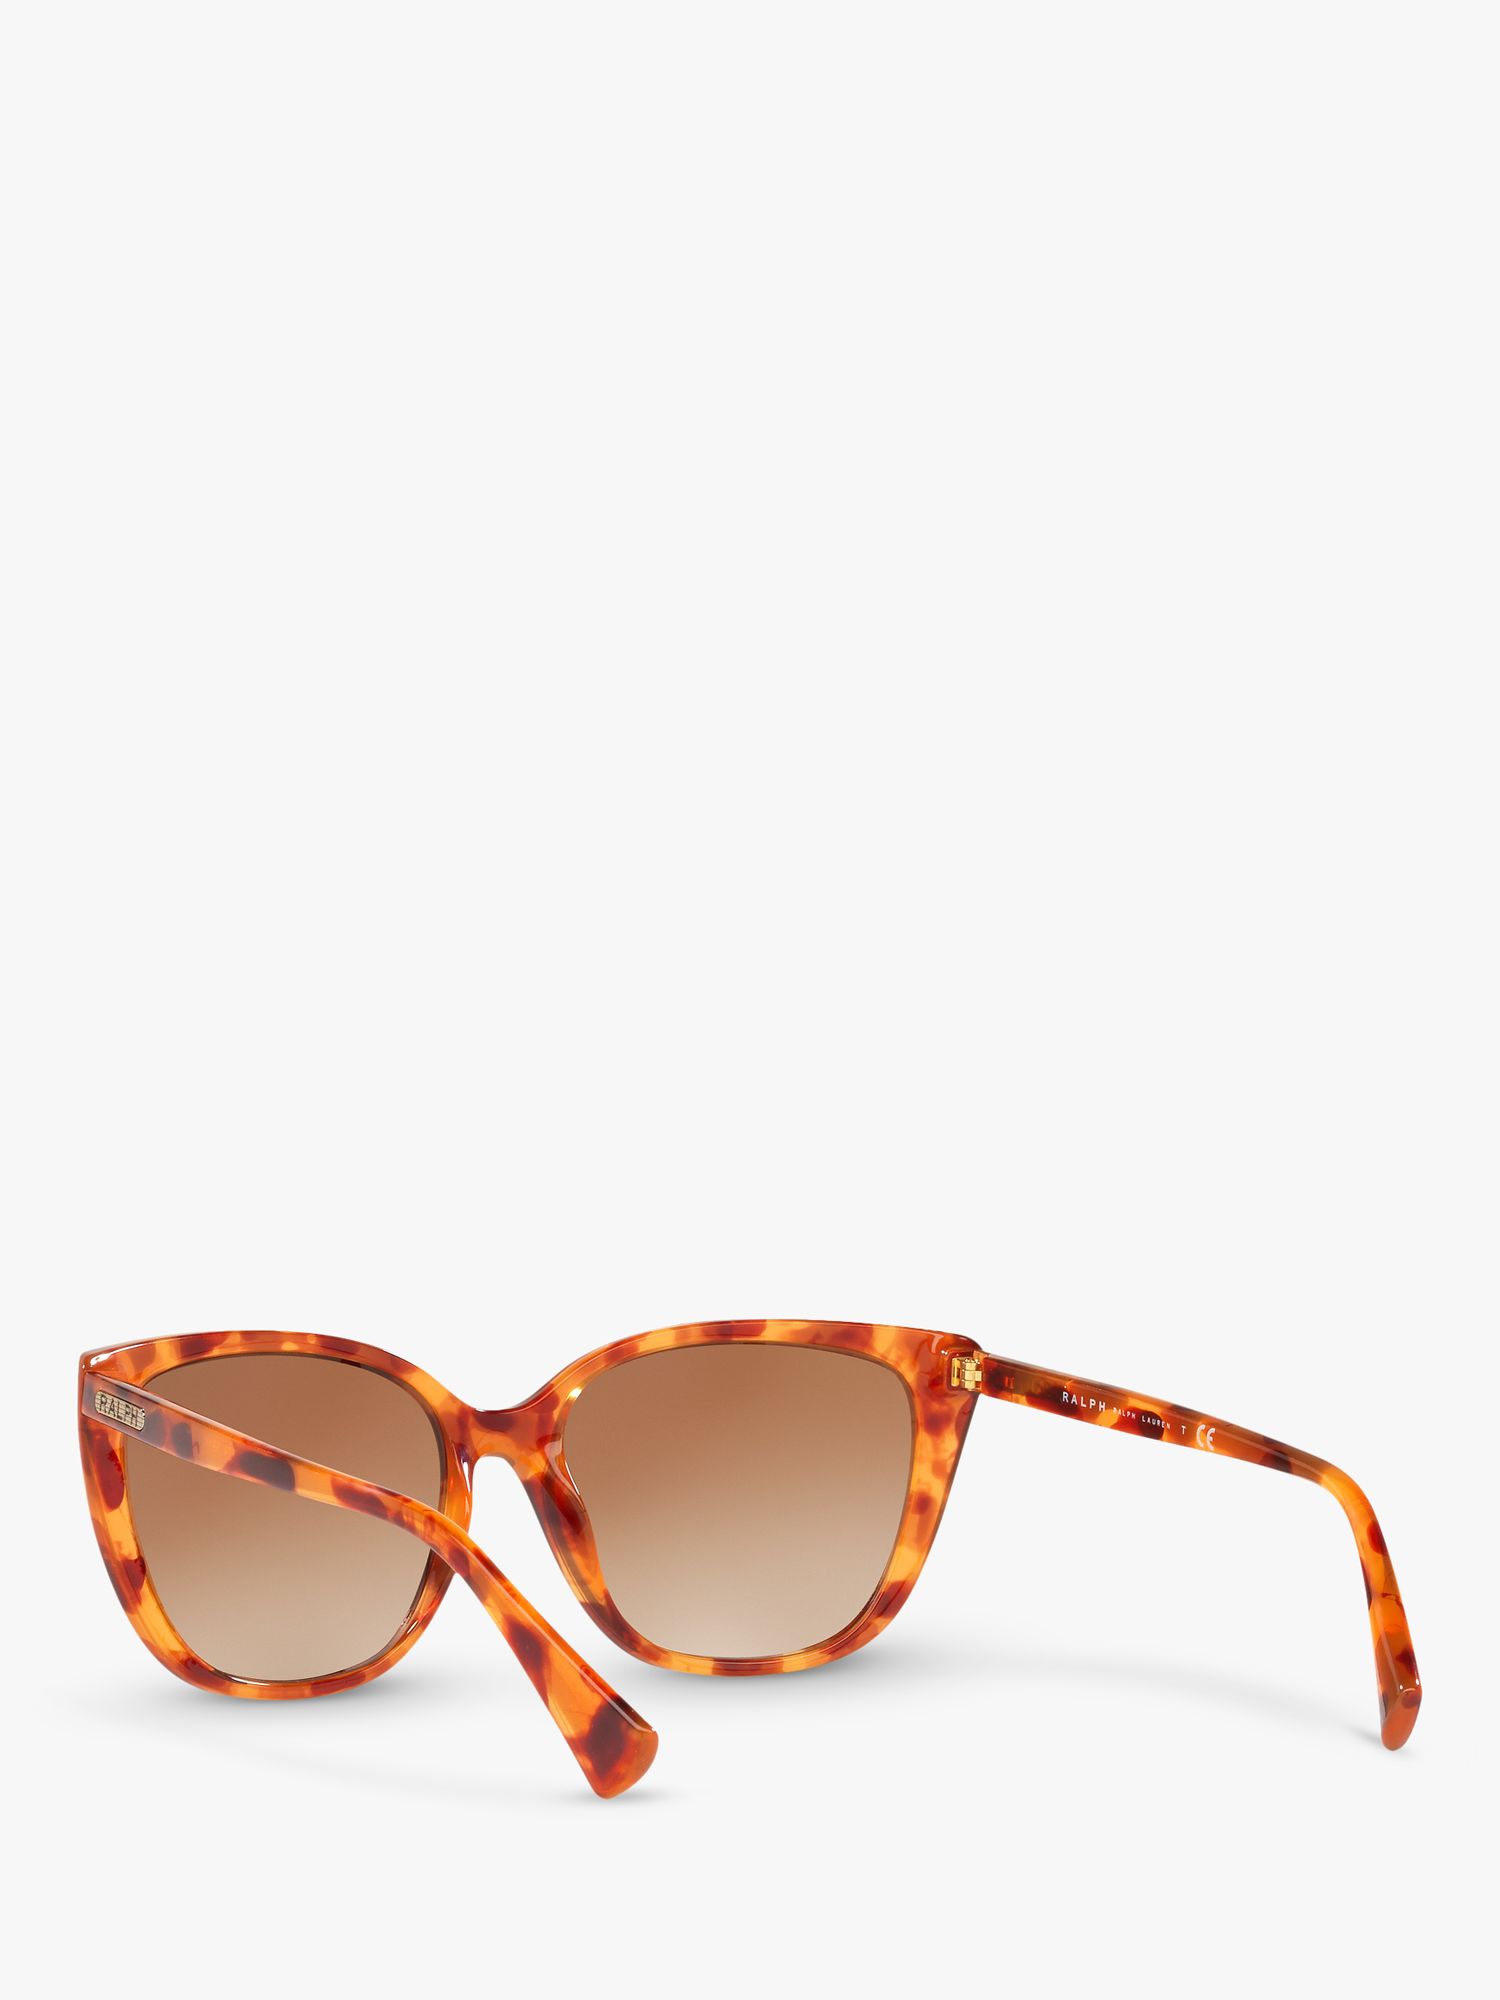 Ralph RA5274 Women's Sponged Tortoiseshell Butterfly Shape Sunglasses ...